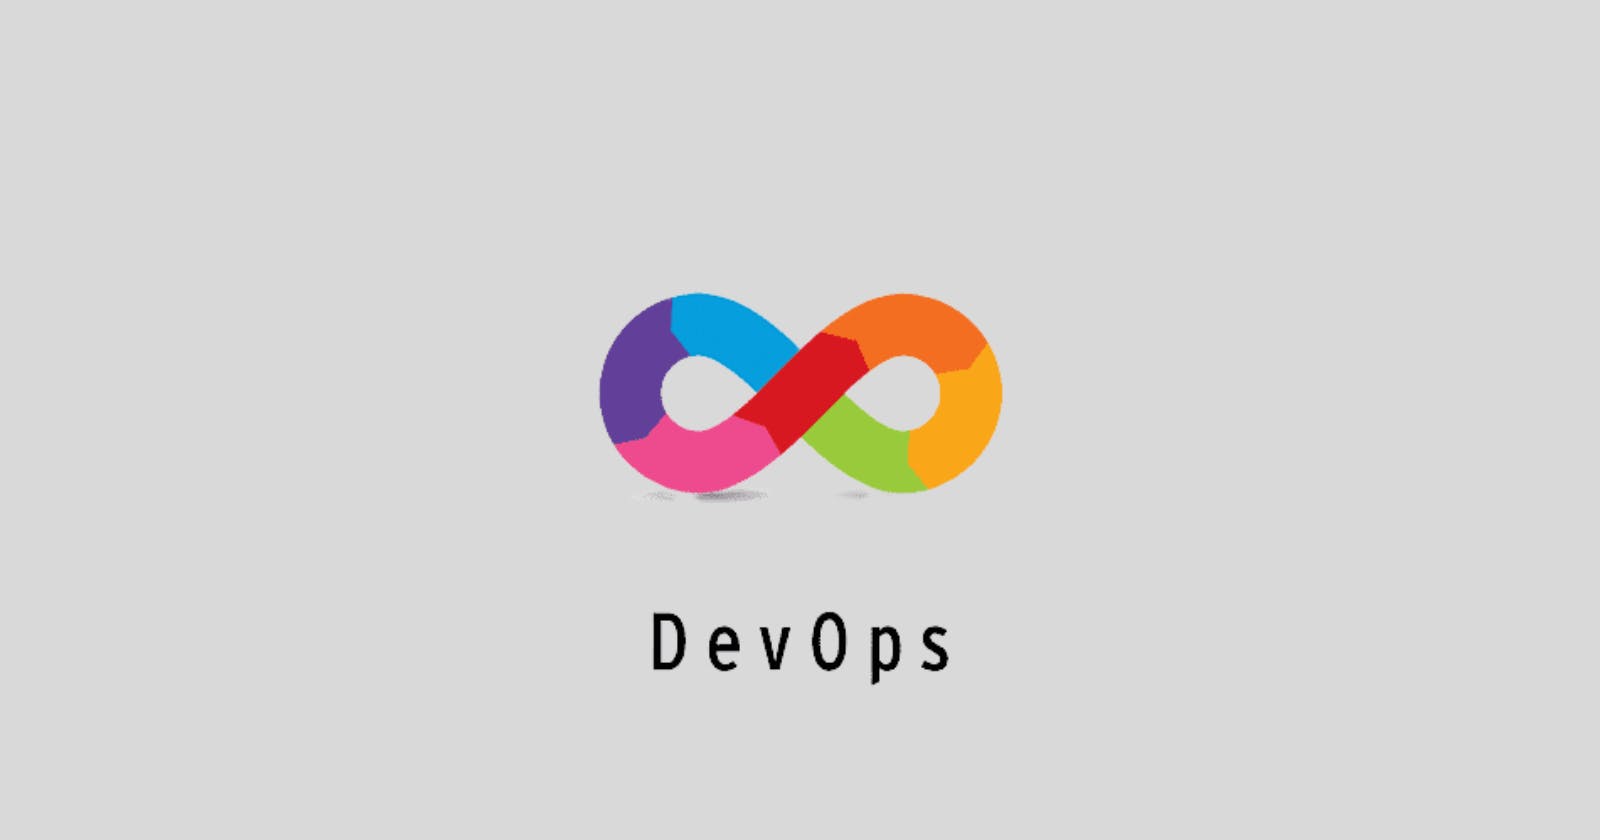 The importance of documentation in DevOps